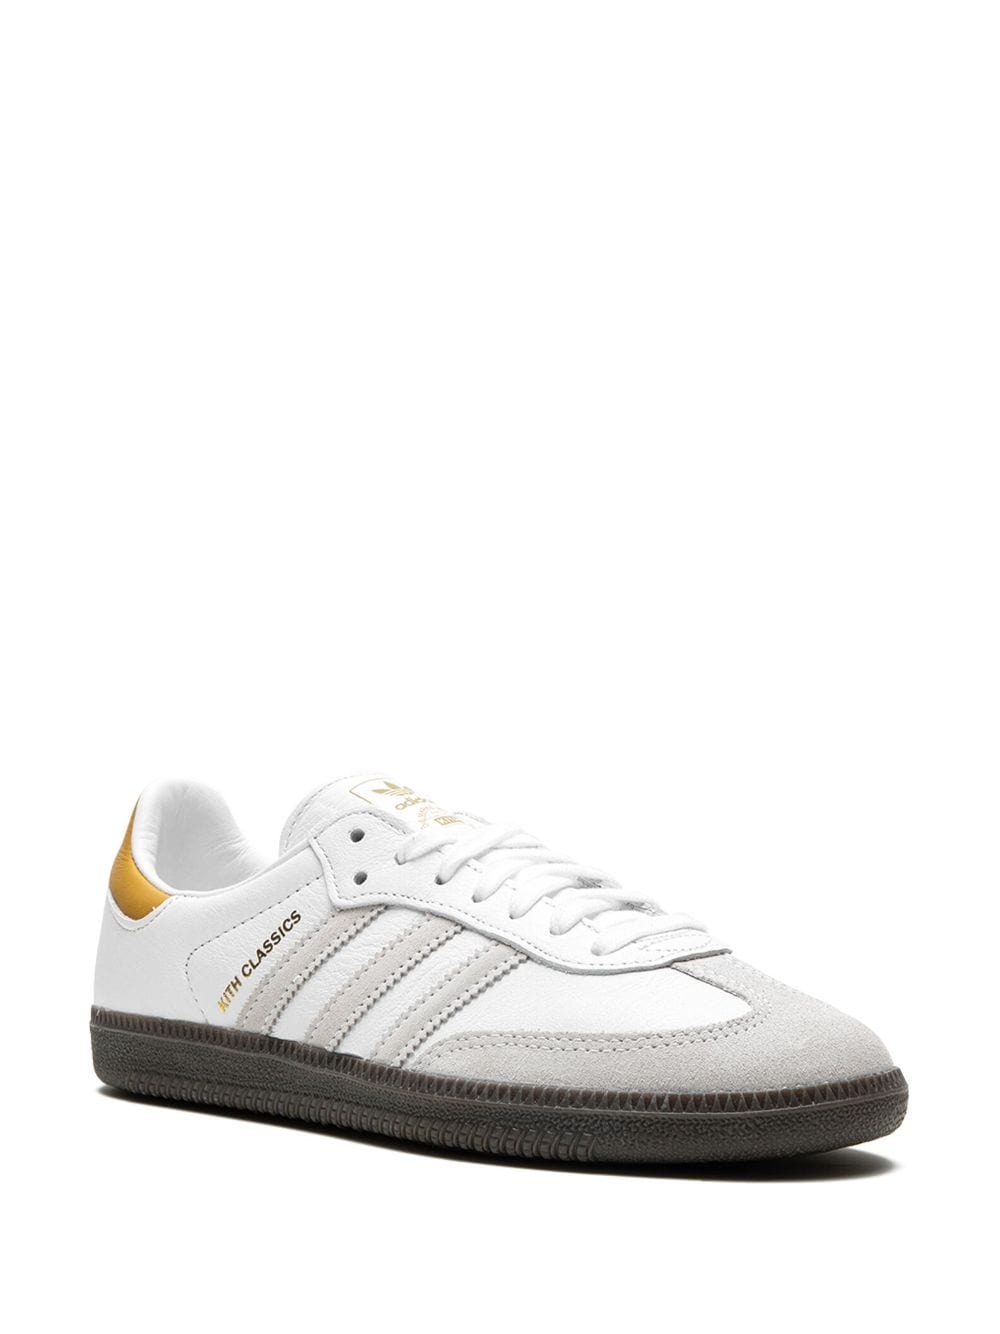 Image 2 of adidas x Kith Samba “White/Grey/Gold” sneakers